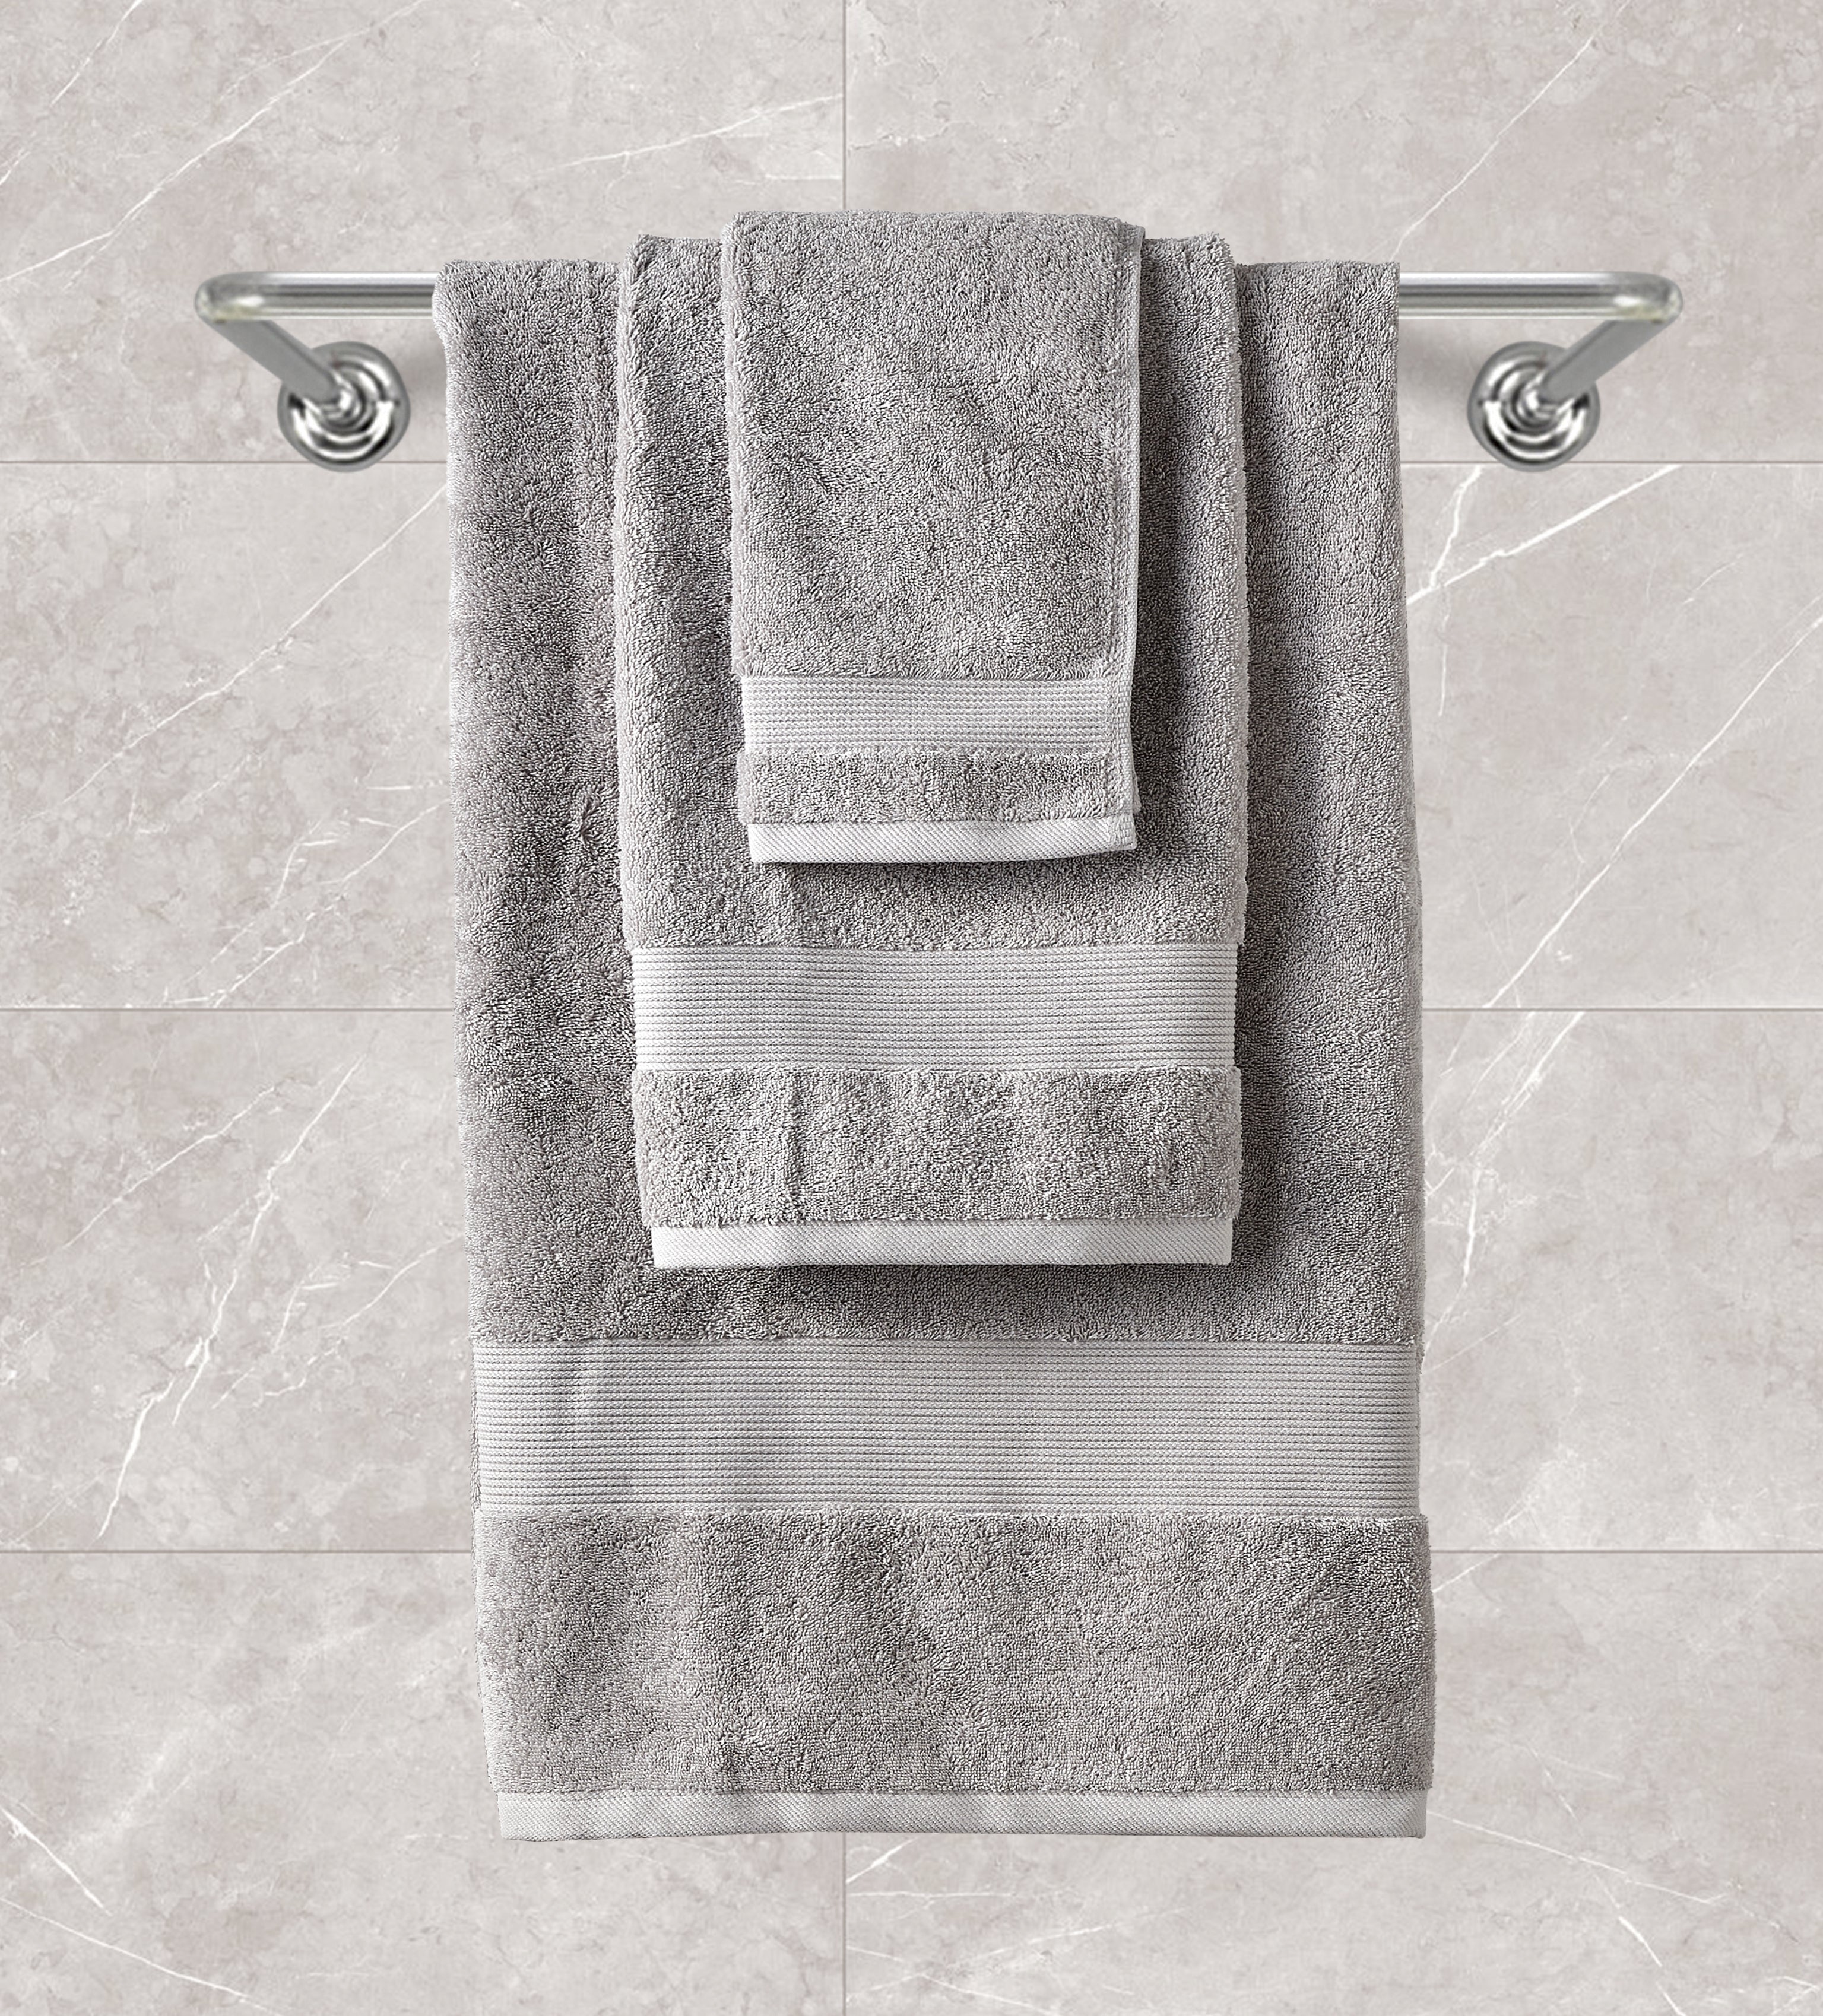 Hotel Collection 100% Cotton 3pcs Towel Set - Aussino Malaysia